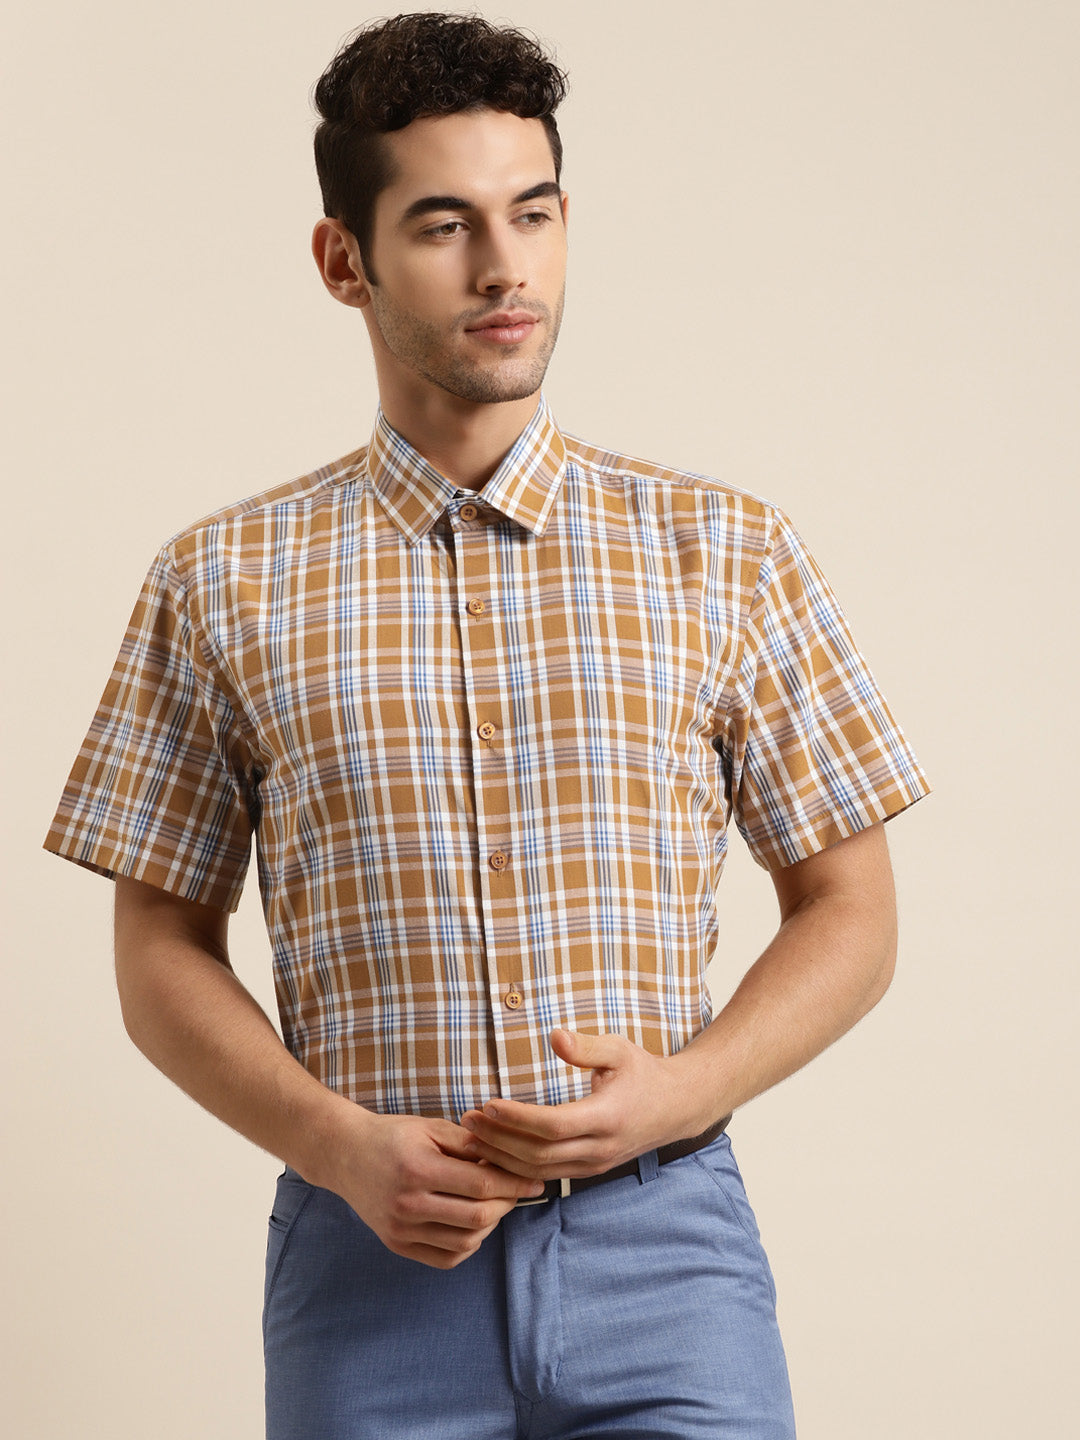 Men's Cotton Mustard & White Half sleeves Casual Shirt